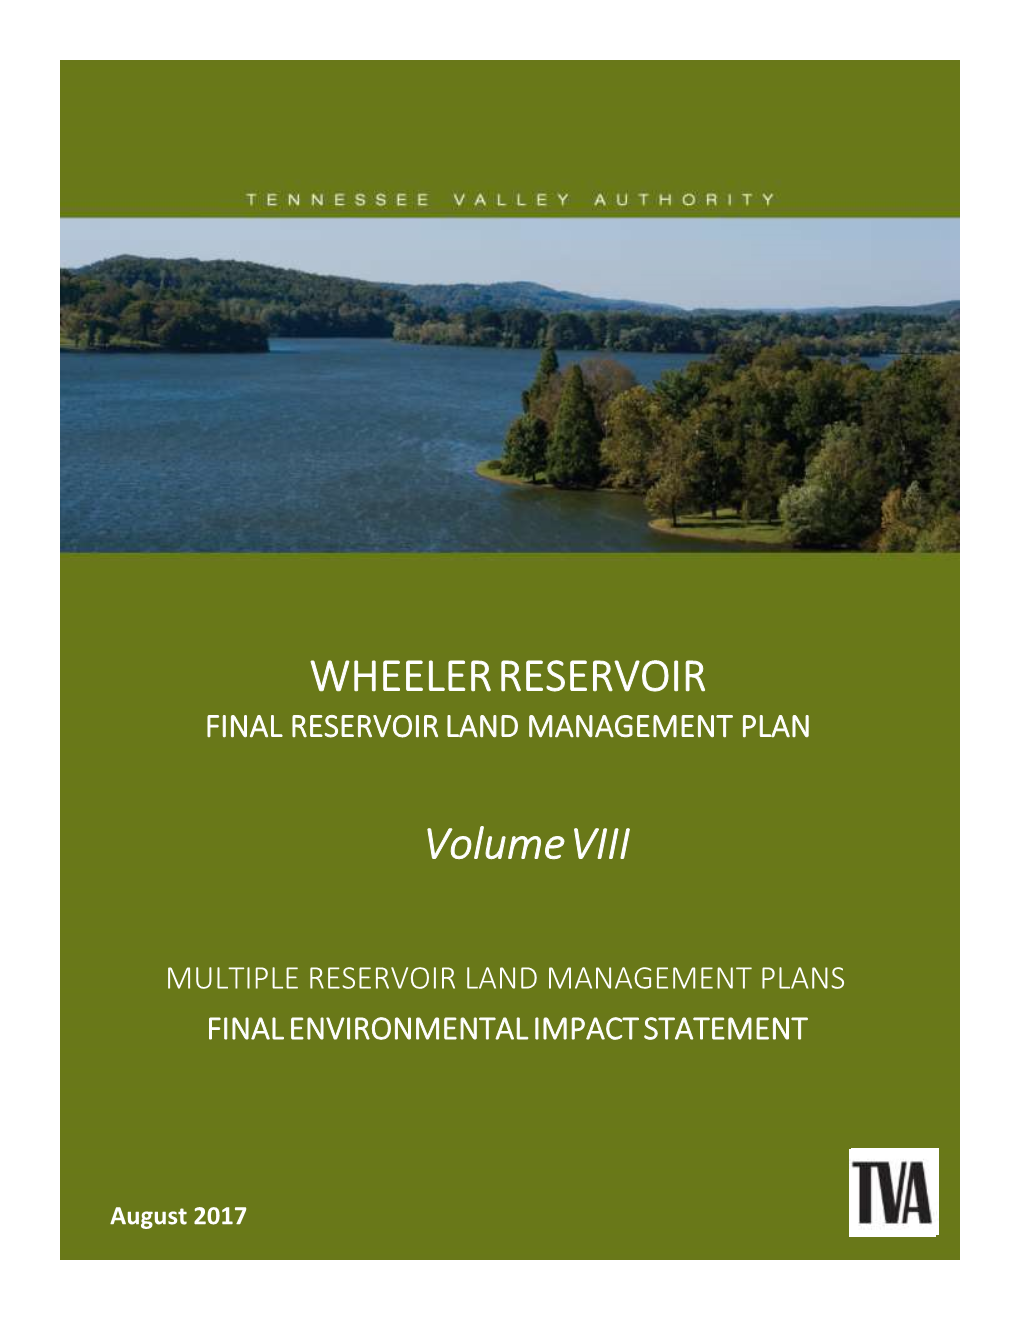 Multiple Reservoir Land Management Plans Final Environmental Impact Statement Volume VIII Wheeler Reservoir